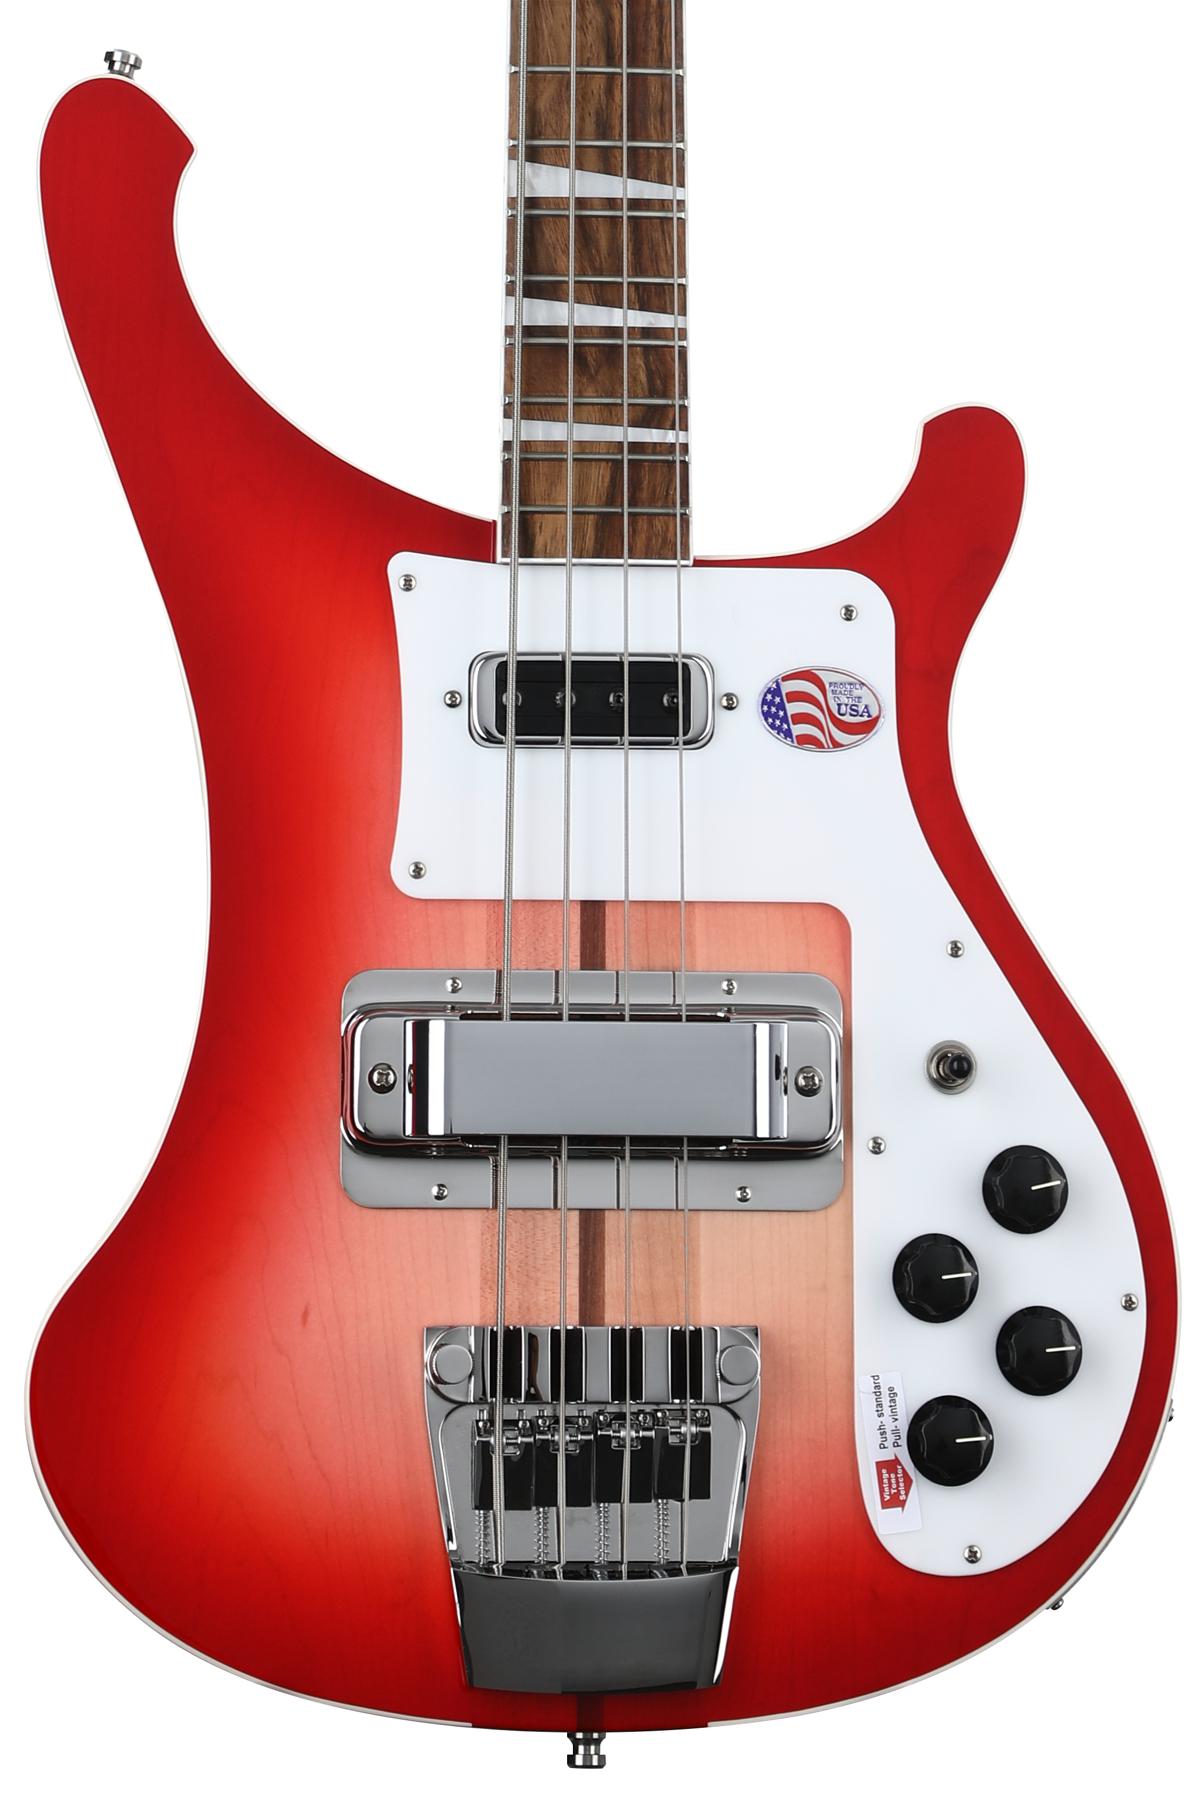 Rickenbacker 4003 Stereo Bass Guitar - Fireglo